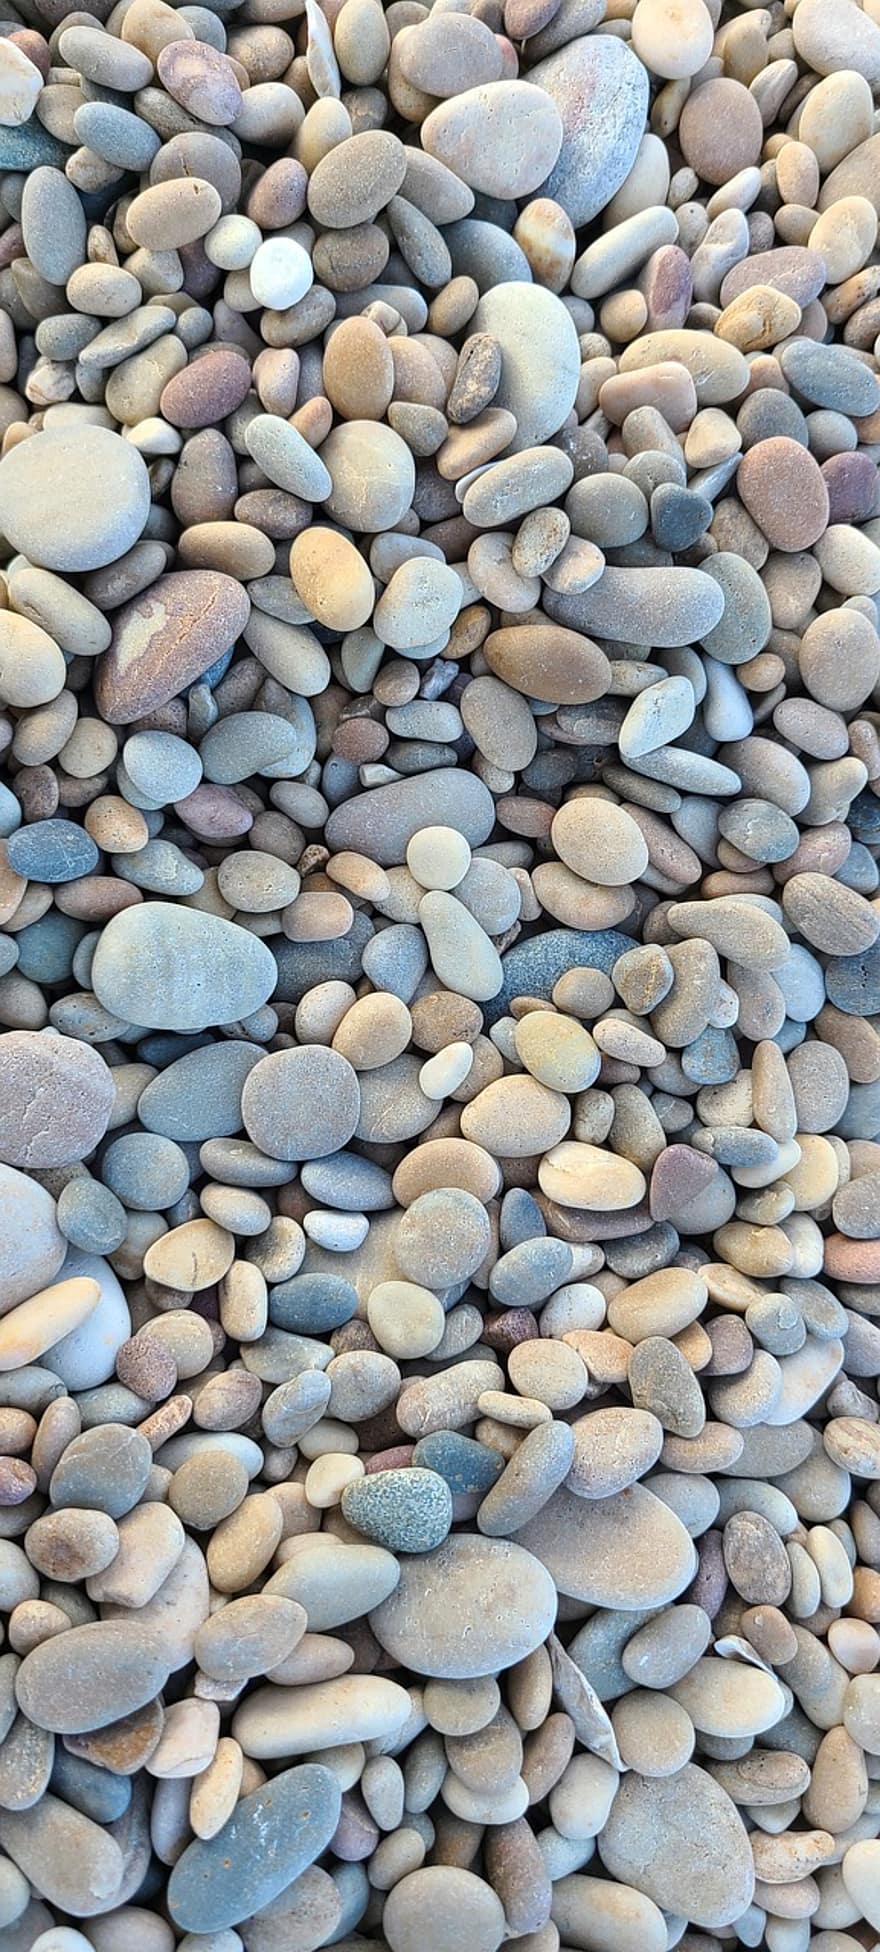 Kongdol Beach, Pebbles, South Korea, Stones, Beach